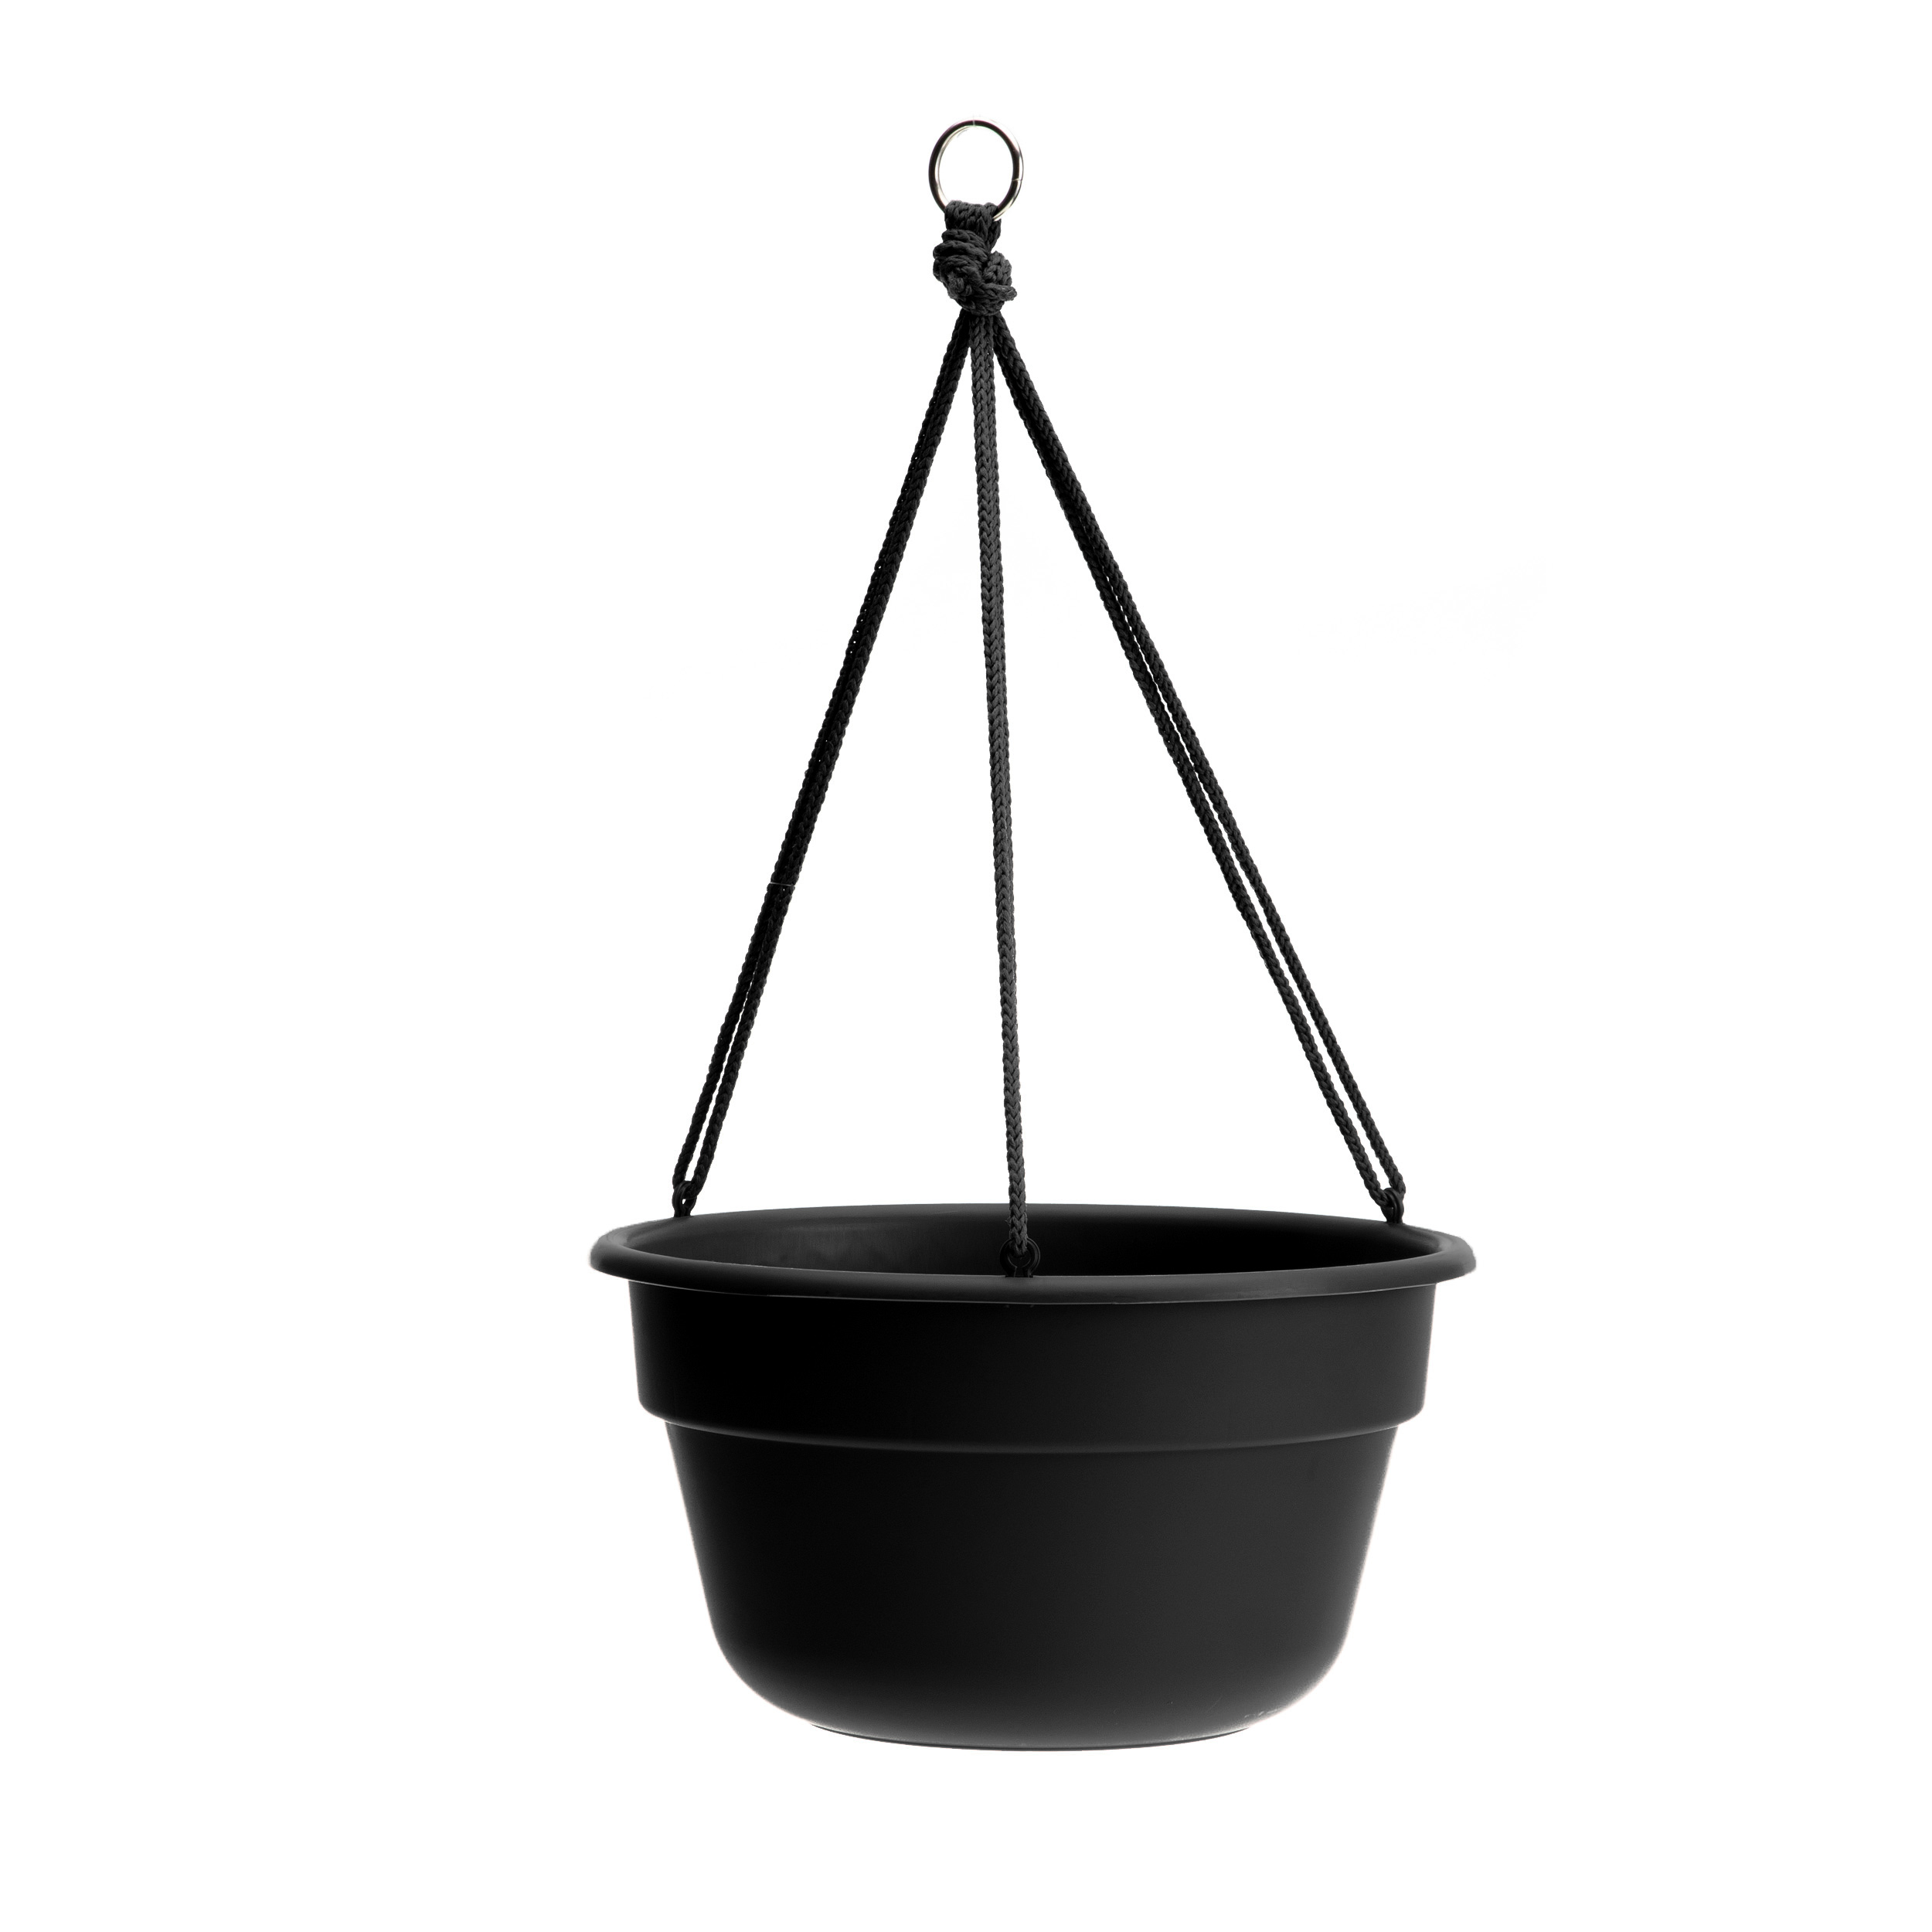 Bloem 12-in Dura Cotta Self Watering Hanging Basket Resin Planter - Black - image 1 of 6